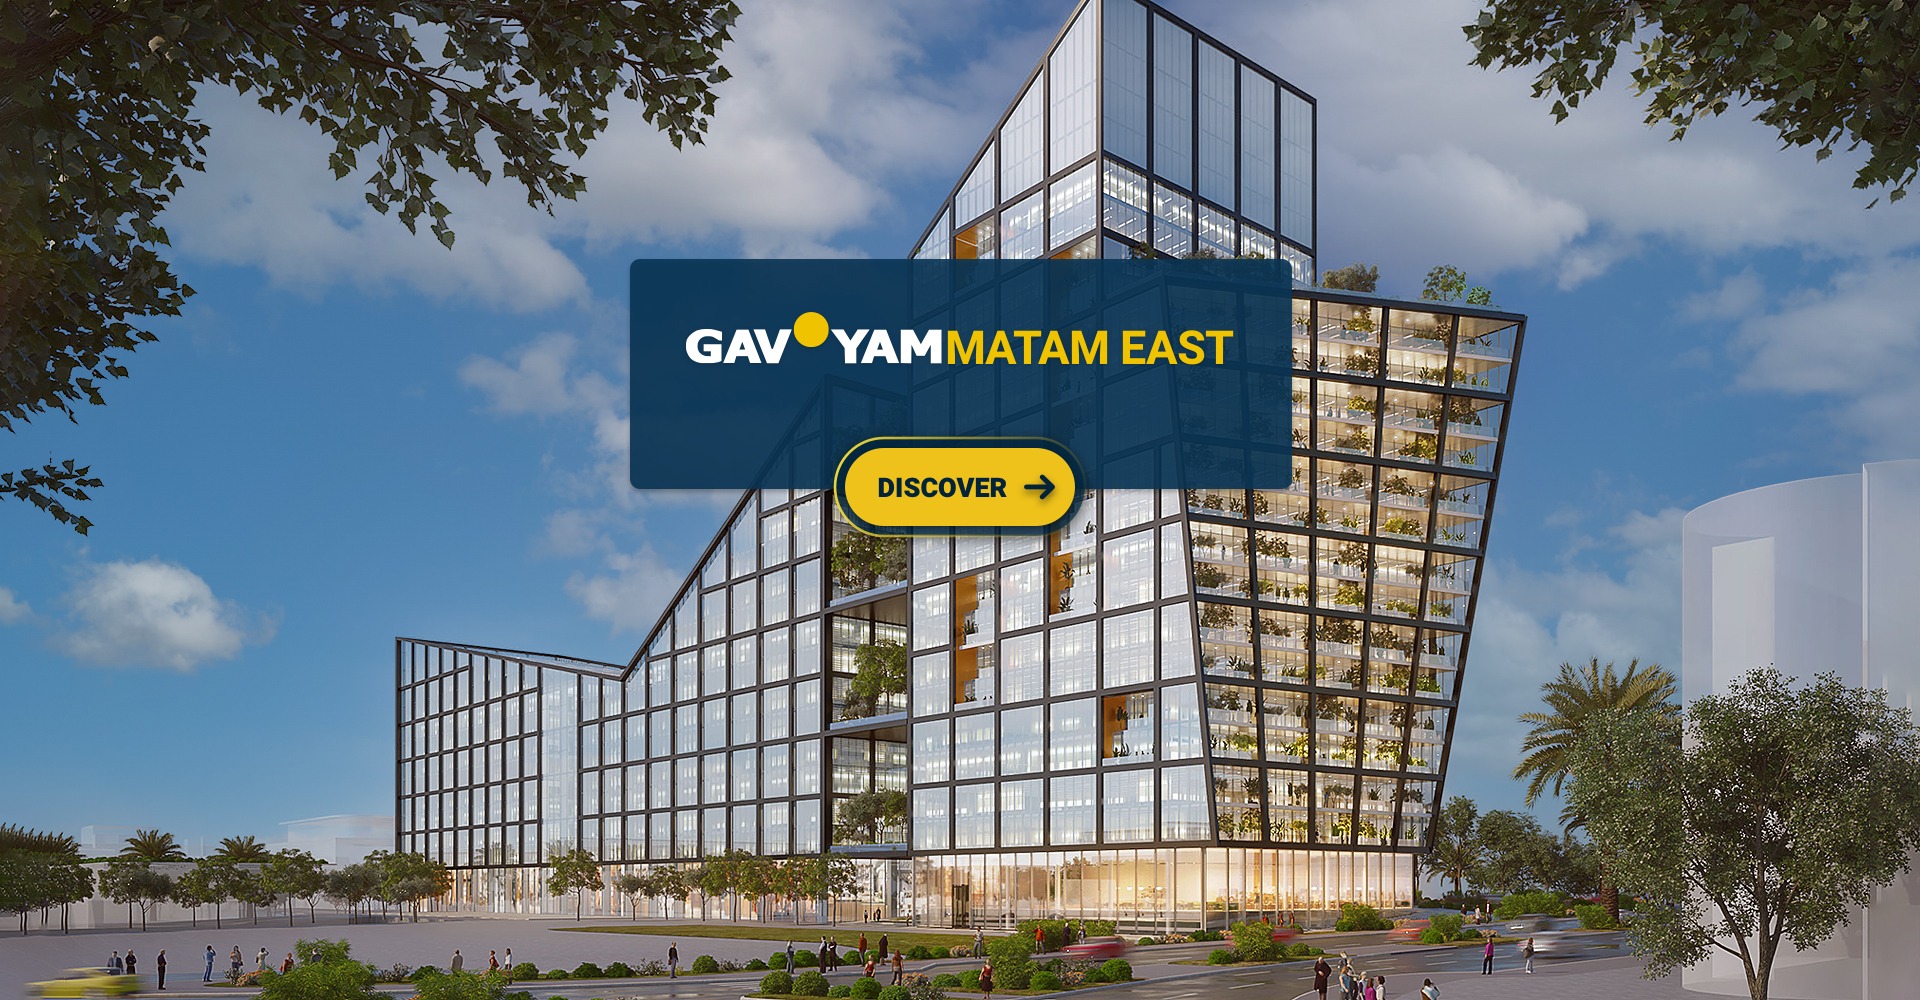 Gav Yam Matam East Discover >